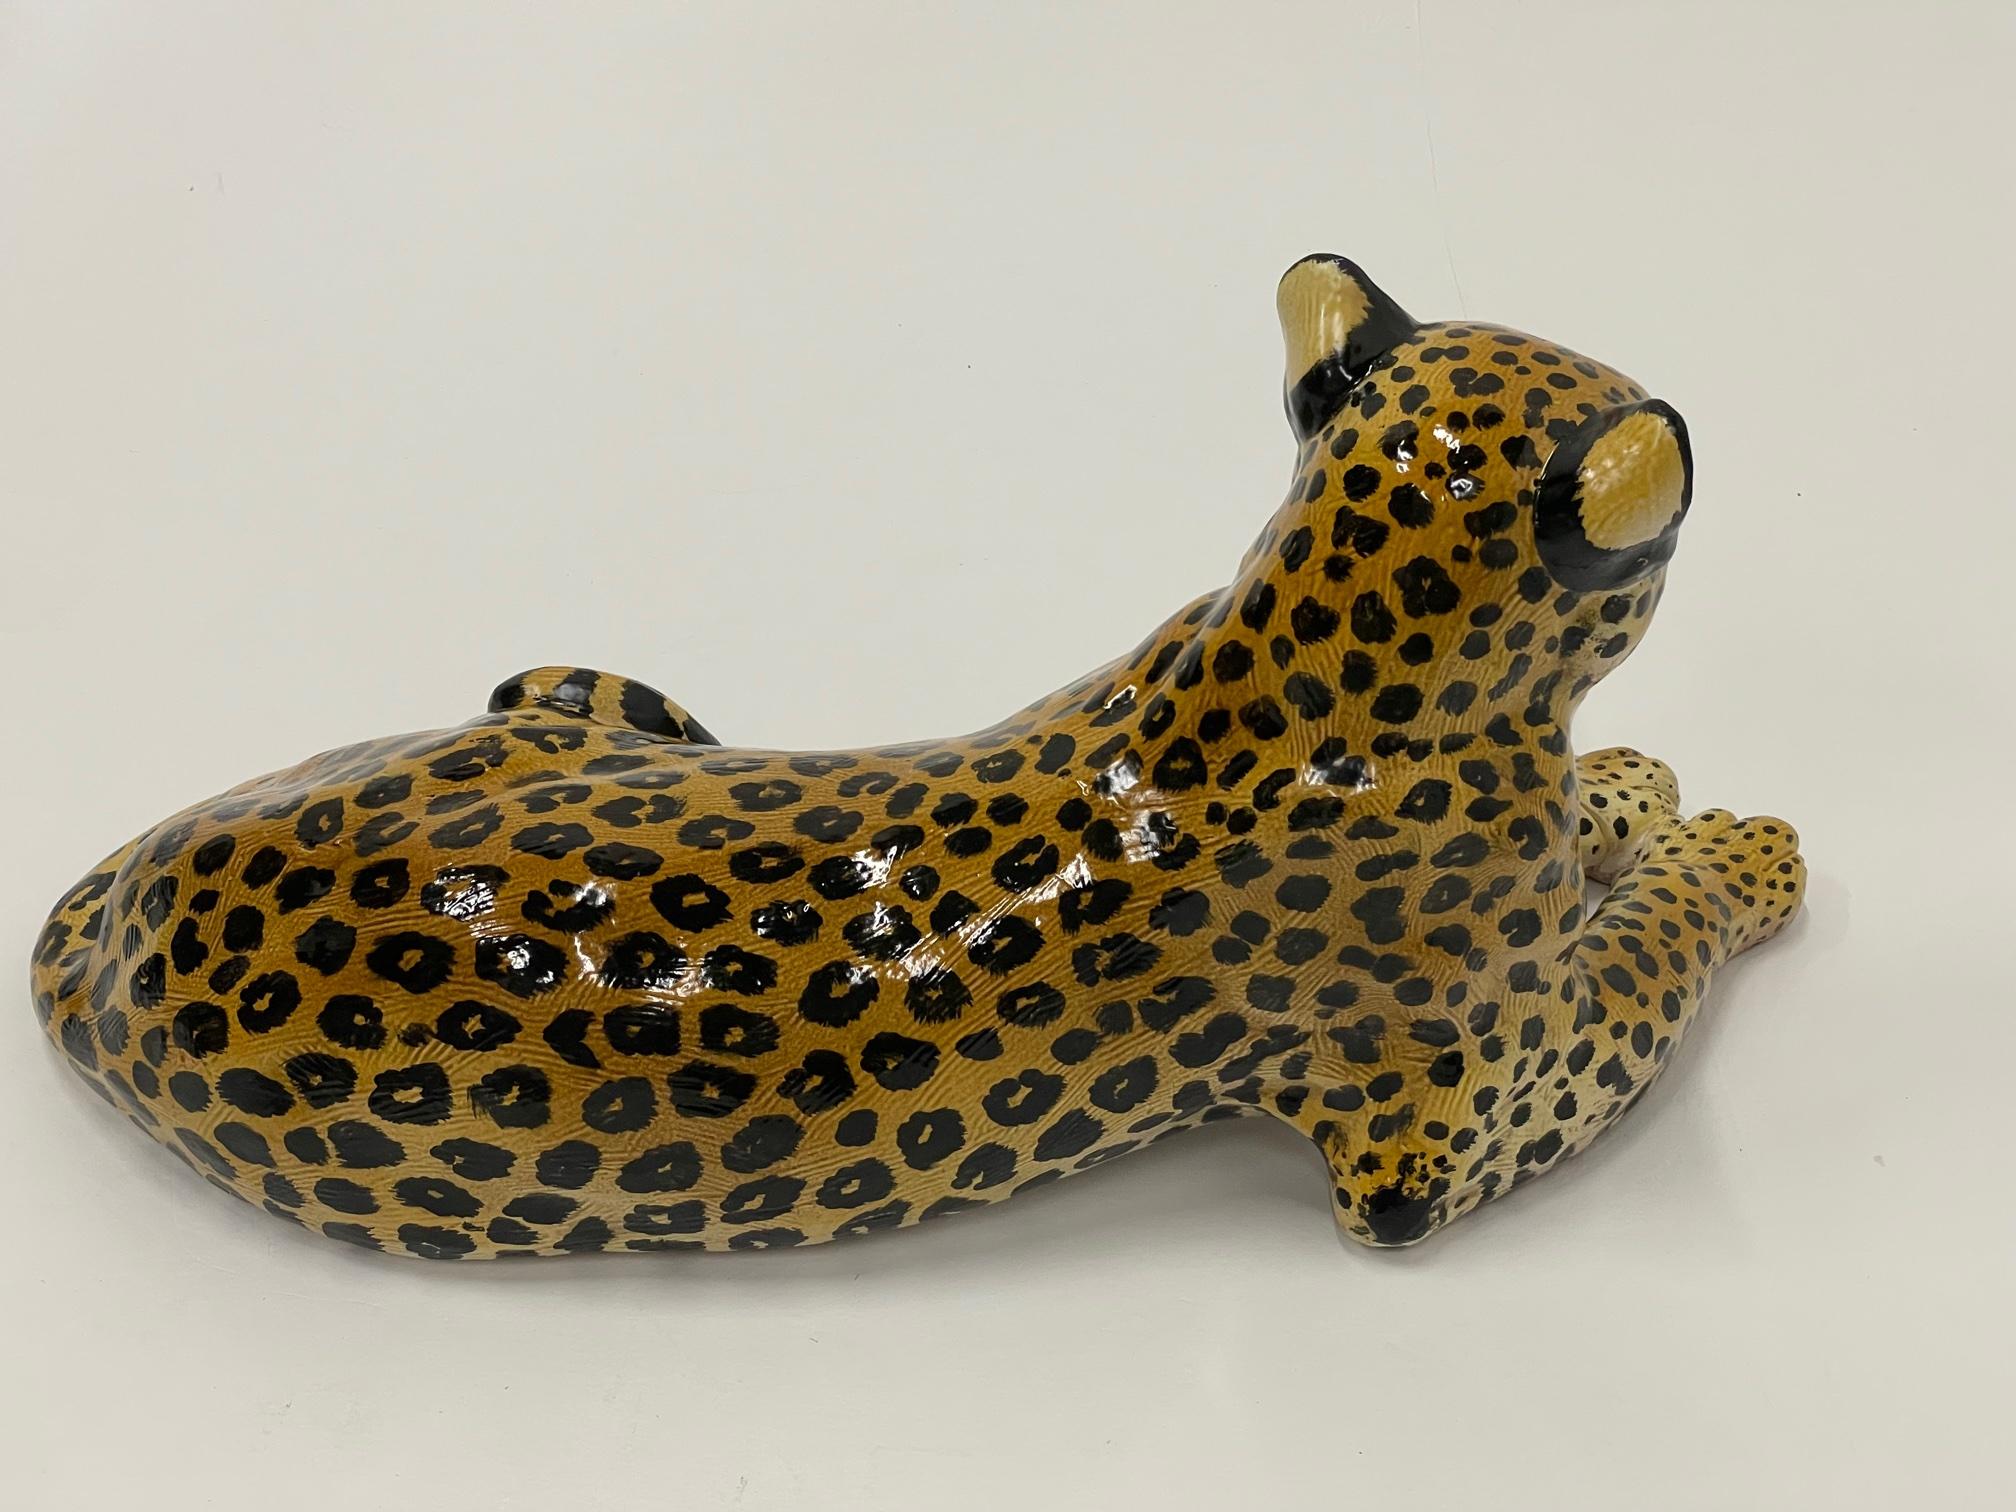 Very Large Lifesize Italian Glazed Terracotta Leopard Sculpture in Repose 1